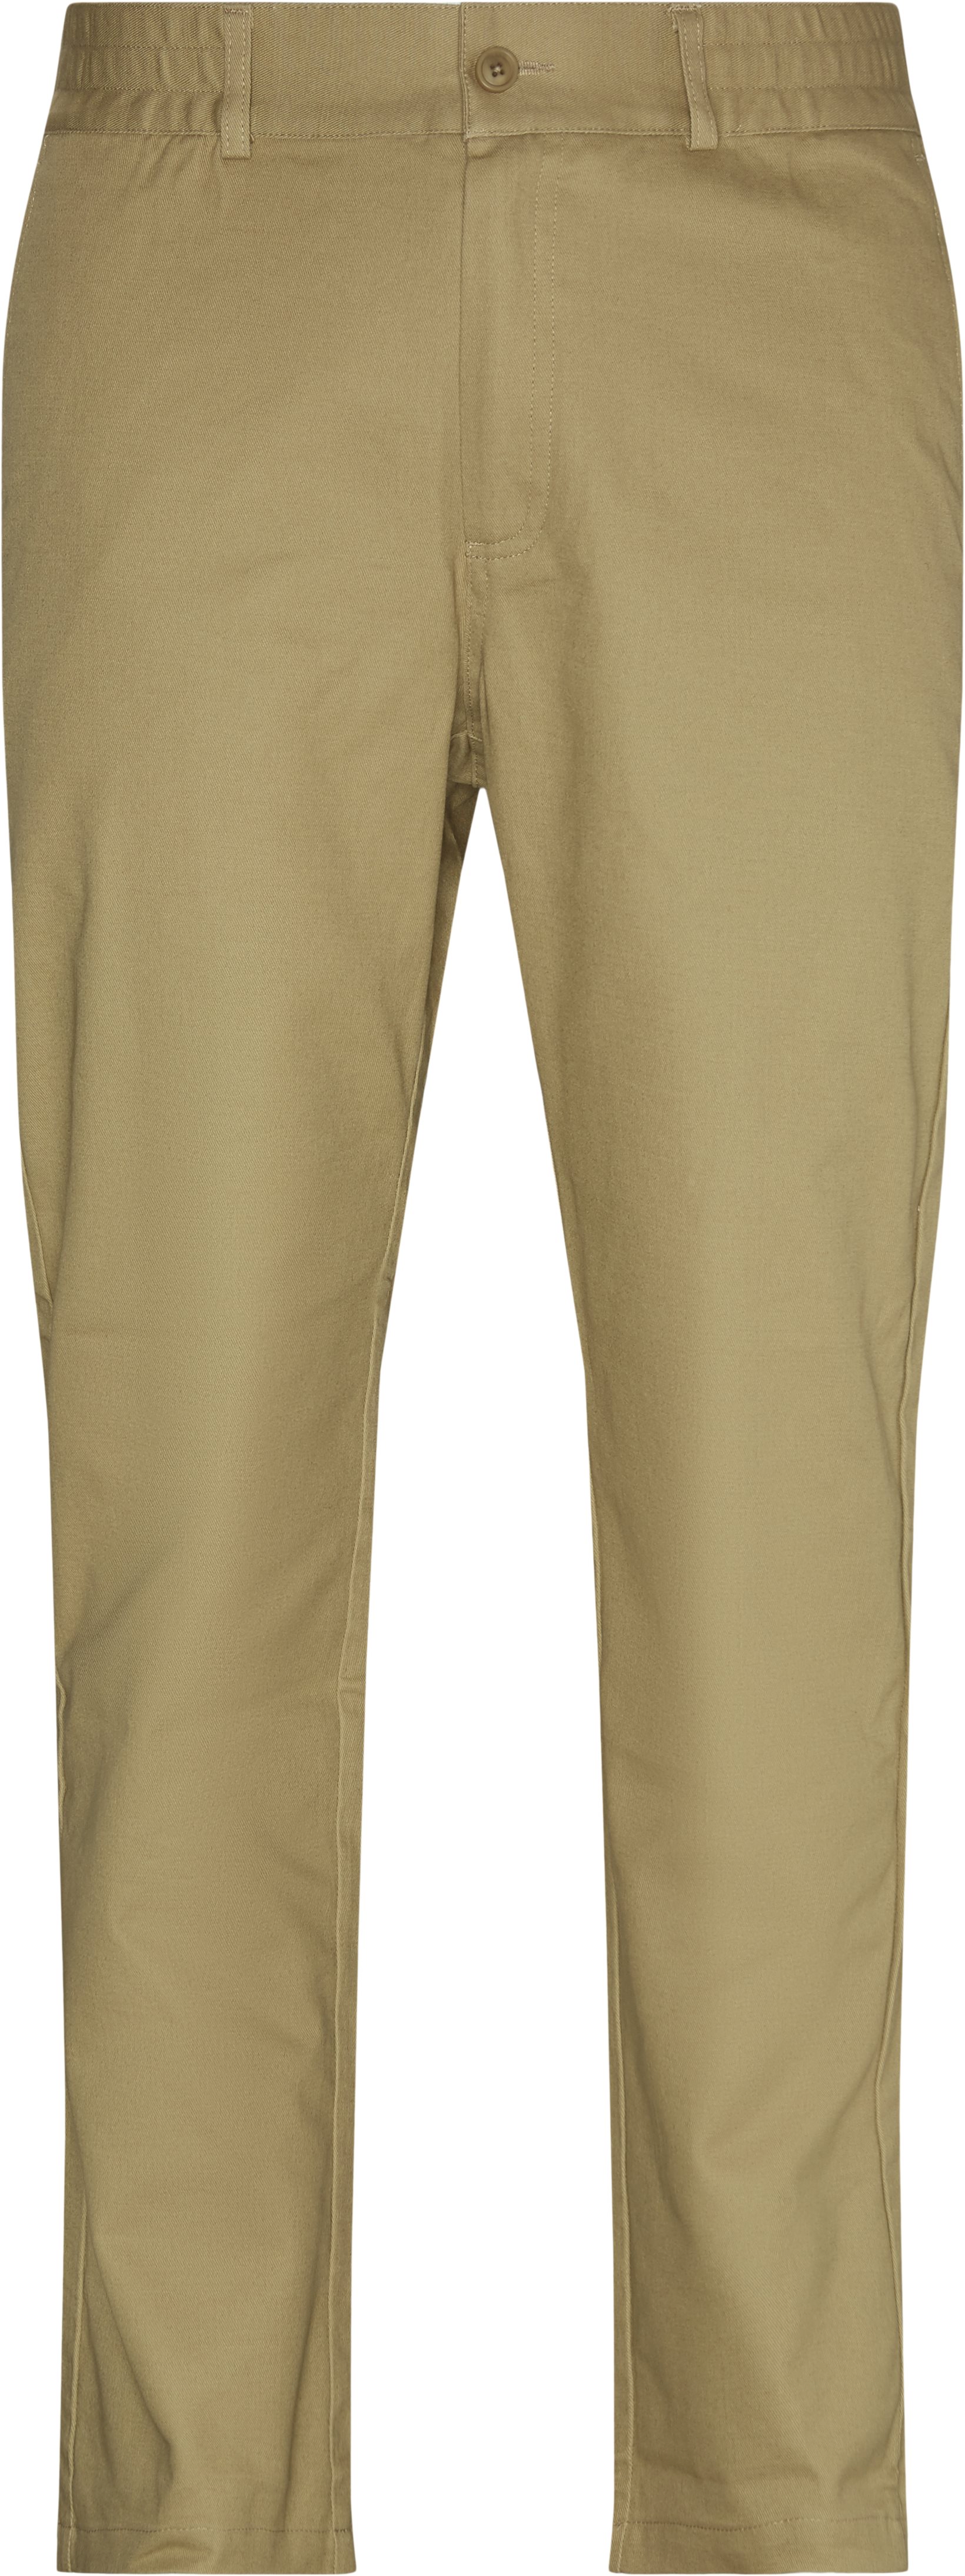 Maverick Trousers - Trousers - Regular fit - Sand